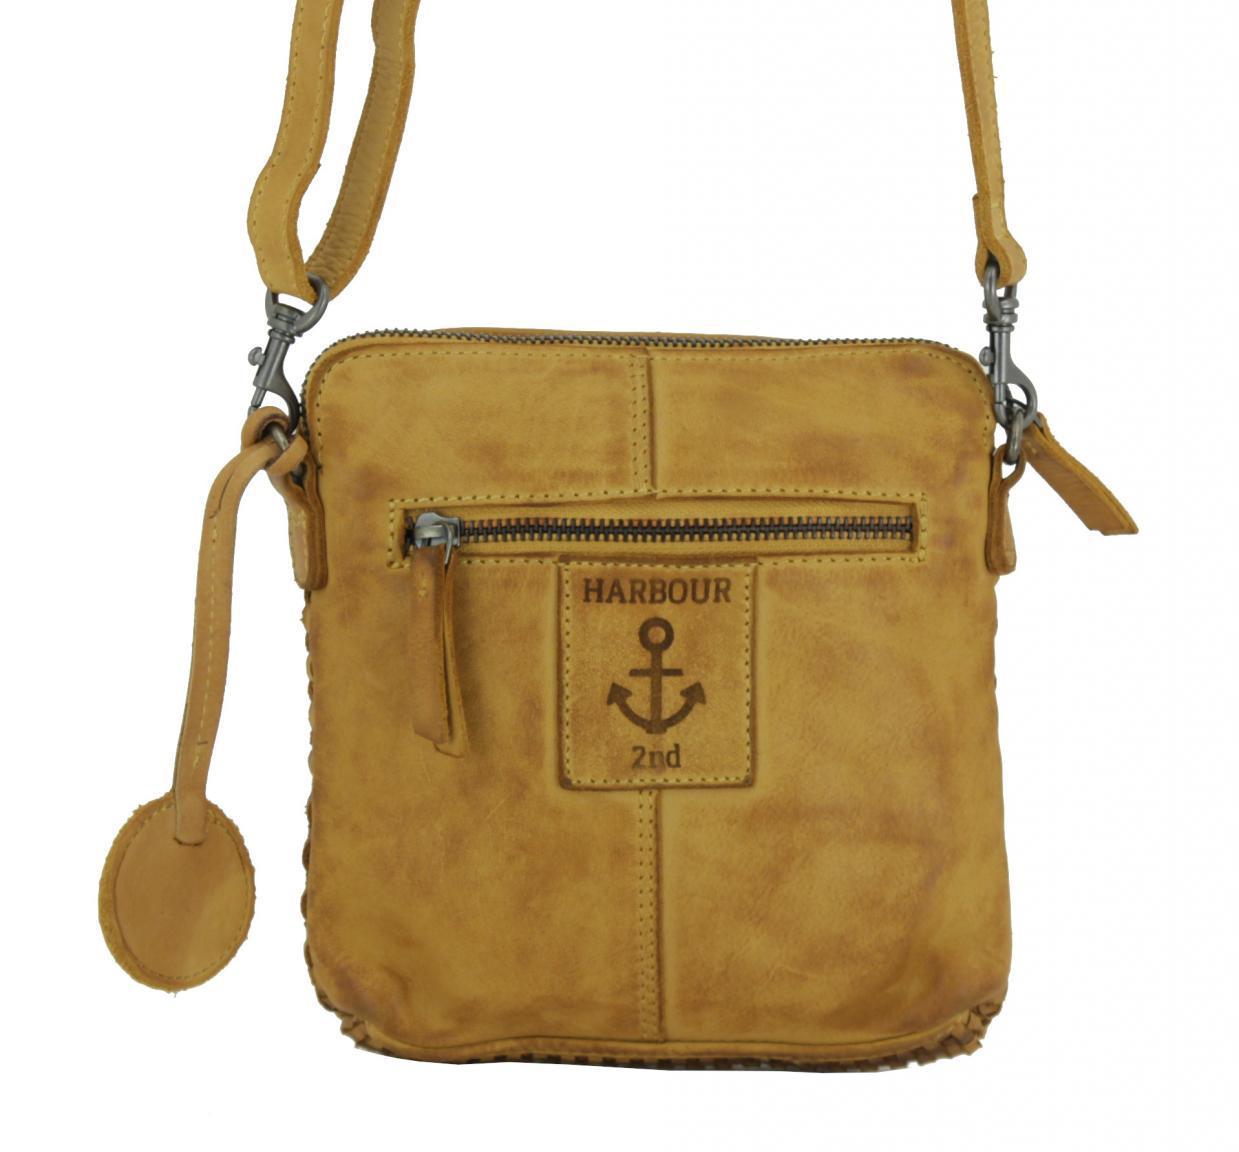 Harbour2nd Crossbody Bag Mustard gelb Thelma Soft Weaving 2